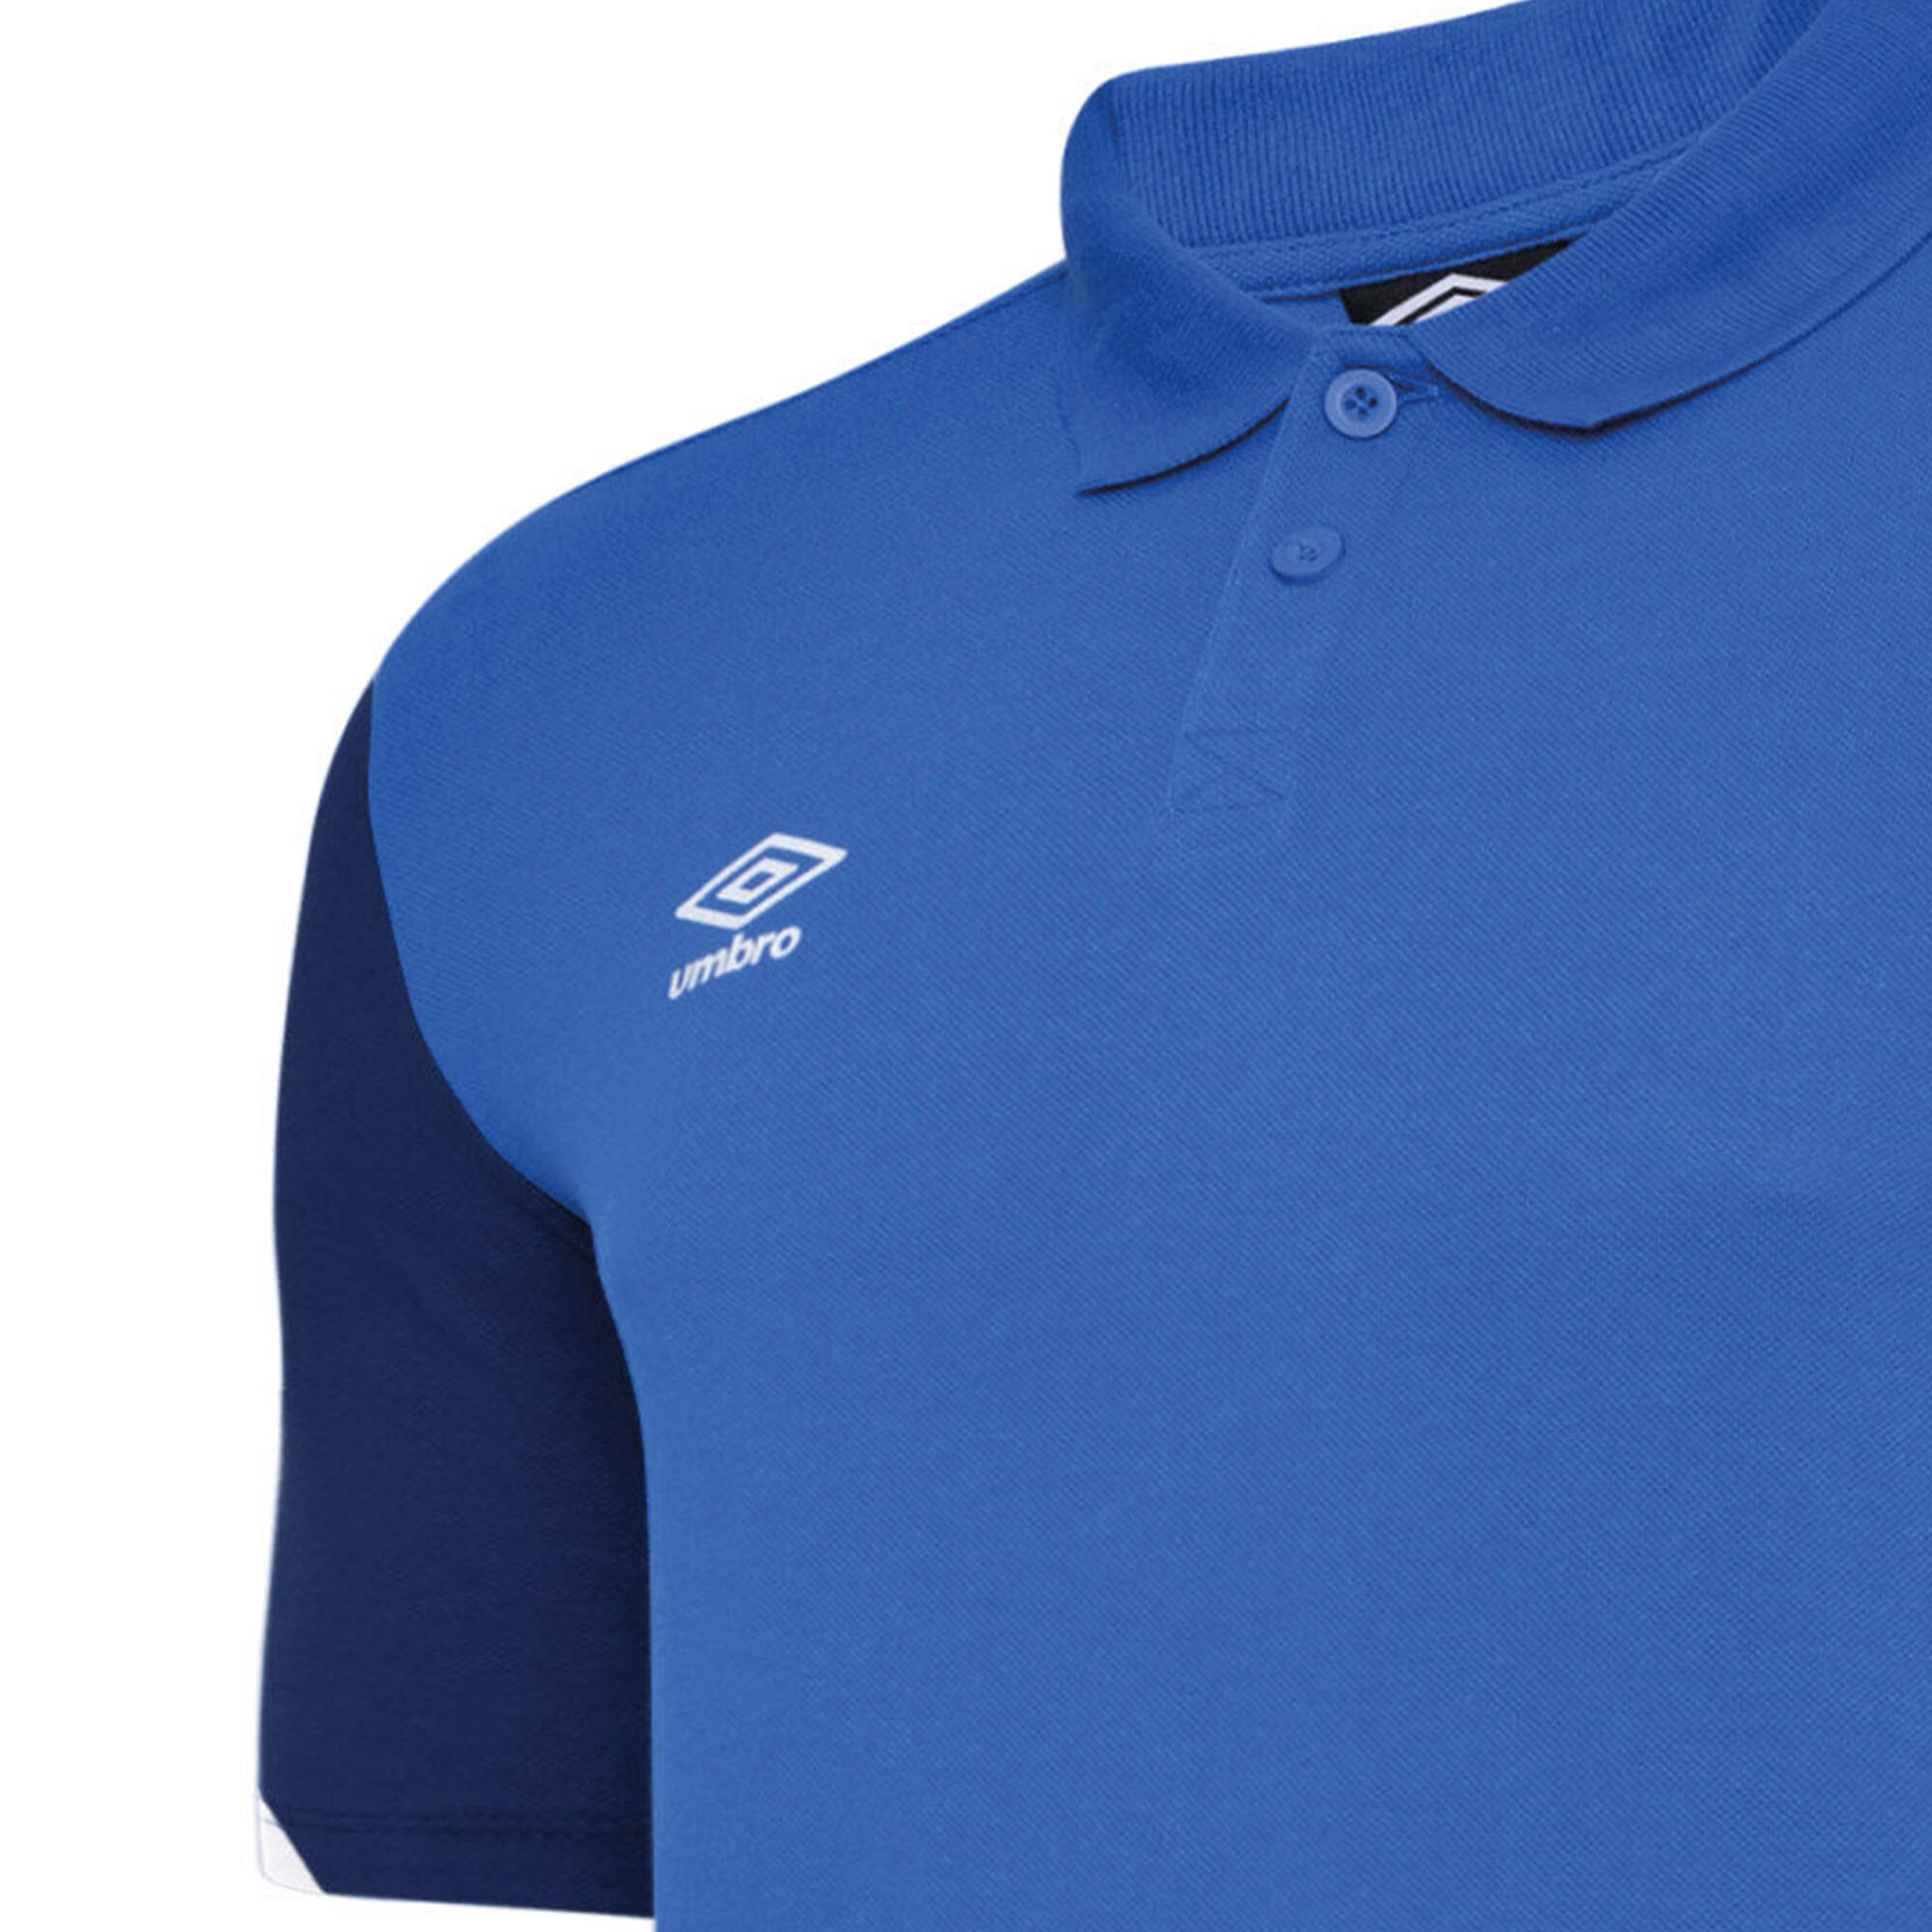 Mens Total Training Polo Shirt (Royal Blue/Dark Navy/White) 3/3